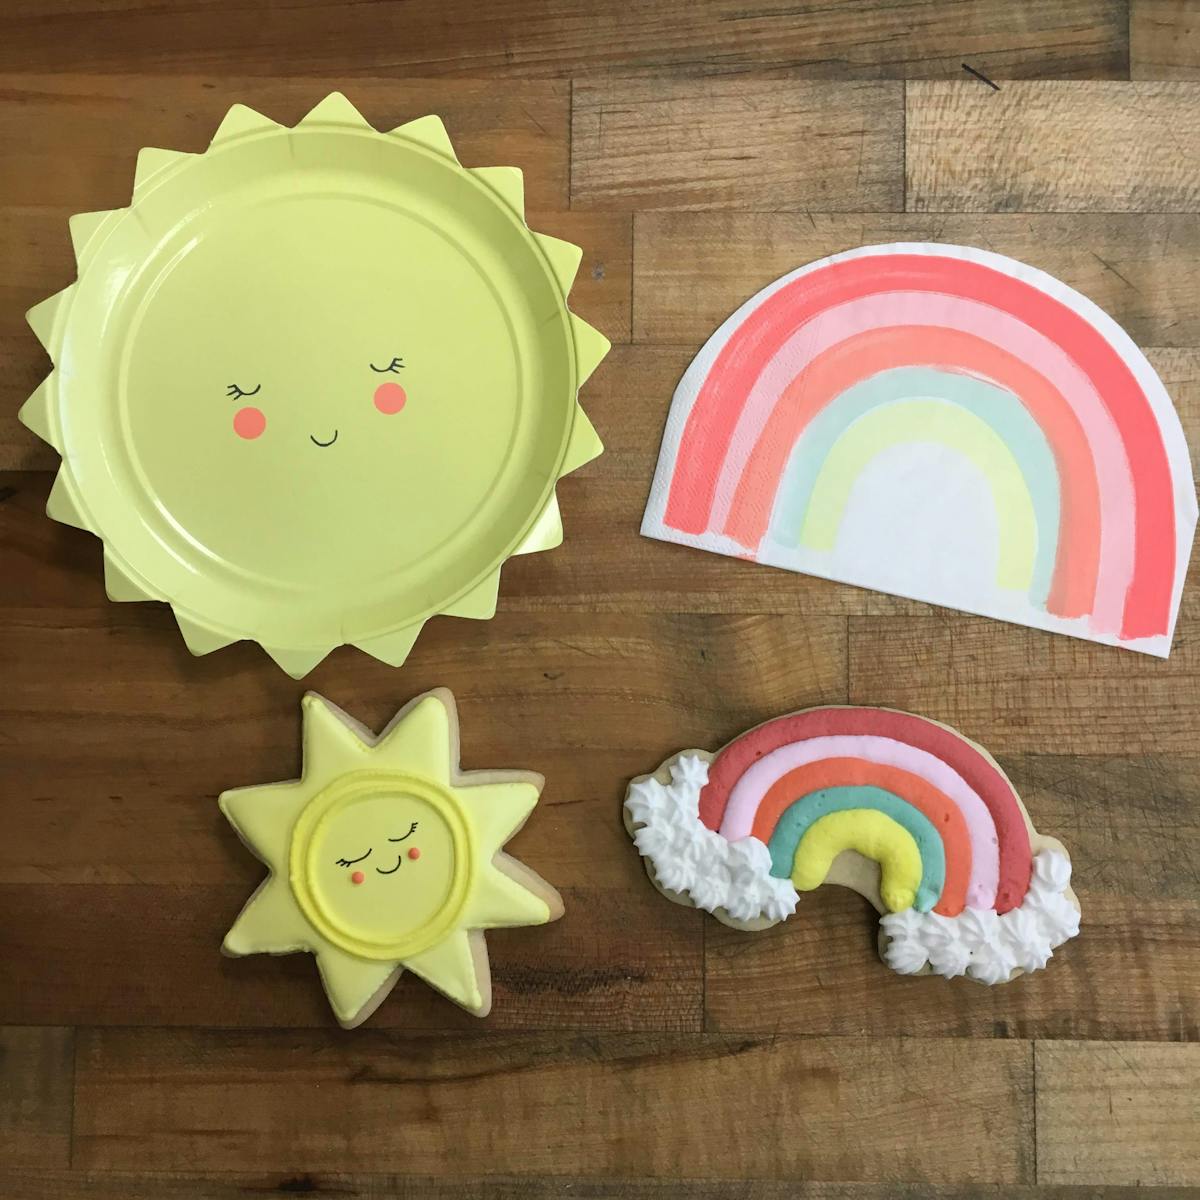 rainbow and sun shaped cookies